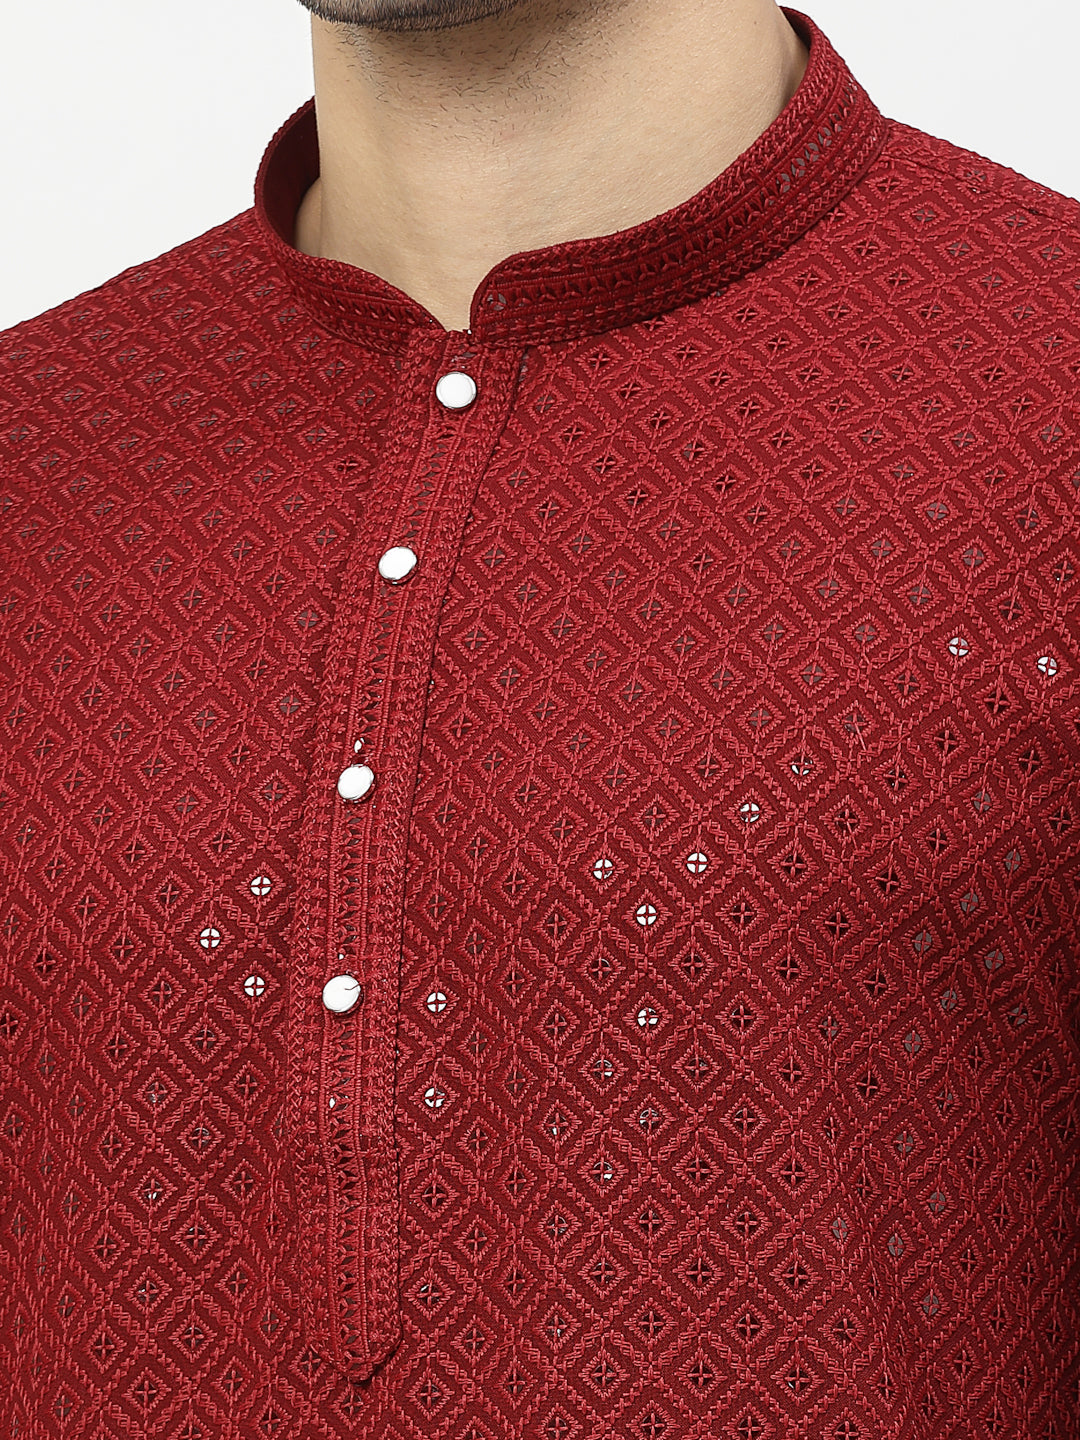 Men's Embroidery Cotton Blend Chikankari Kurta Set with White Pyjama (Red Color)